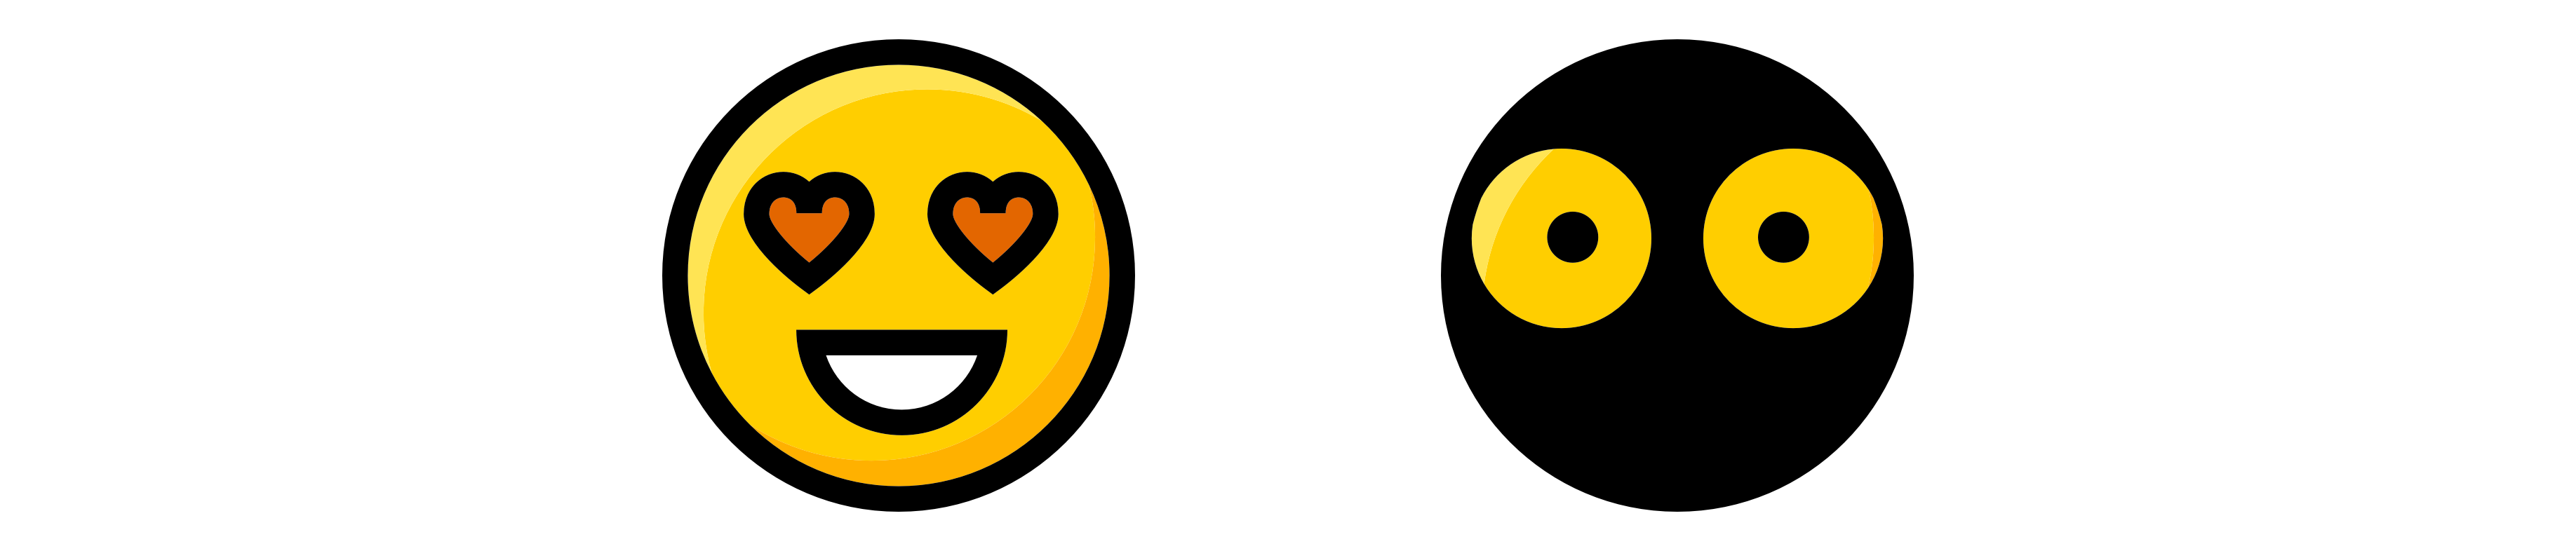 Cross-platform emoji support